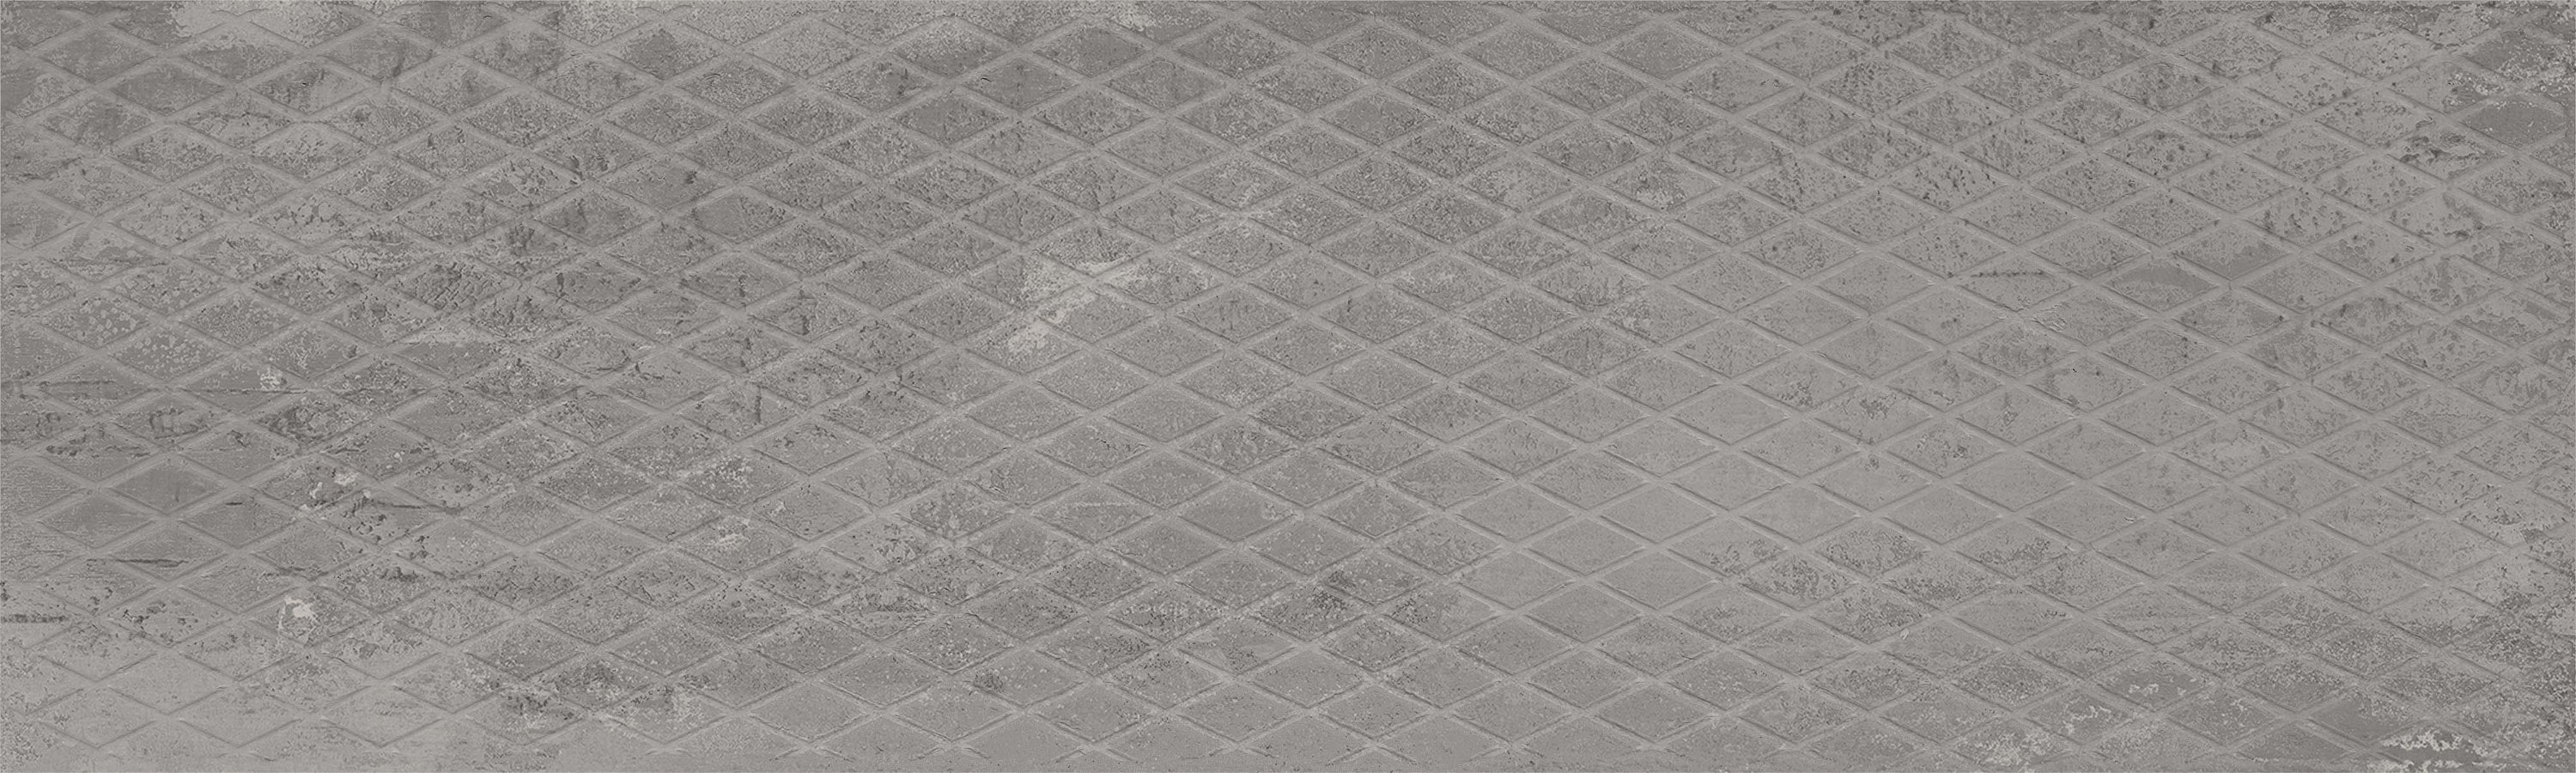 Wandfliese Dekor Metalloptik grau 30x100cm "Metallic Wall Grey Plate" rektifiziert 